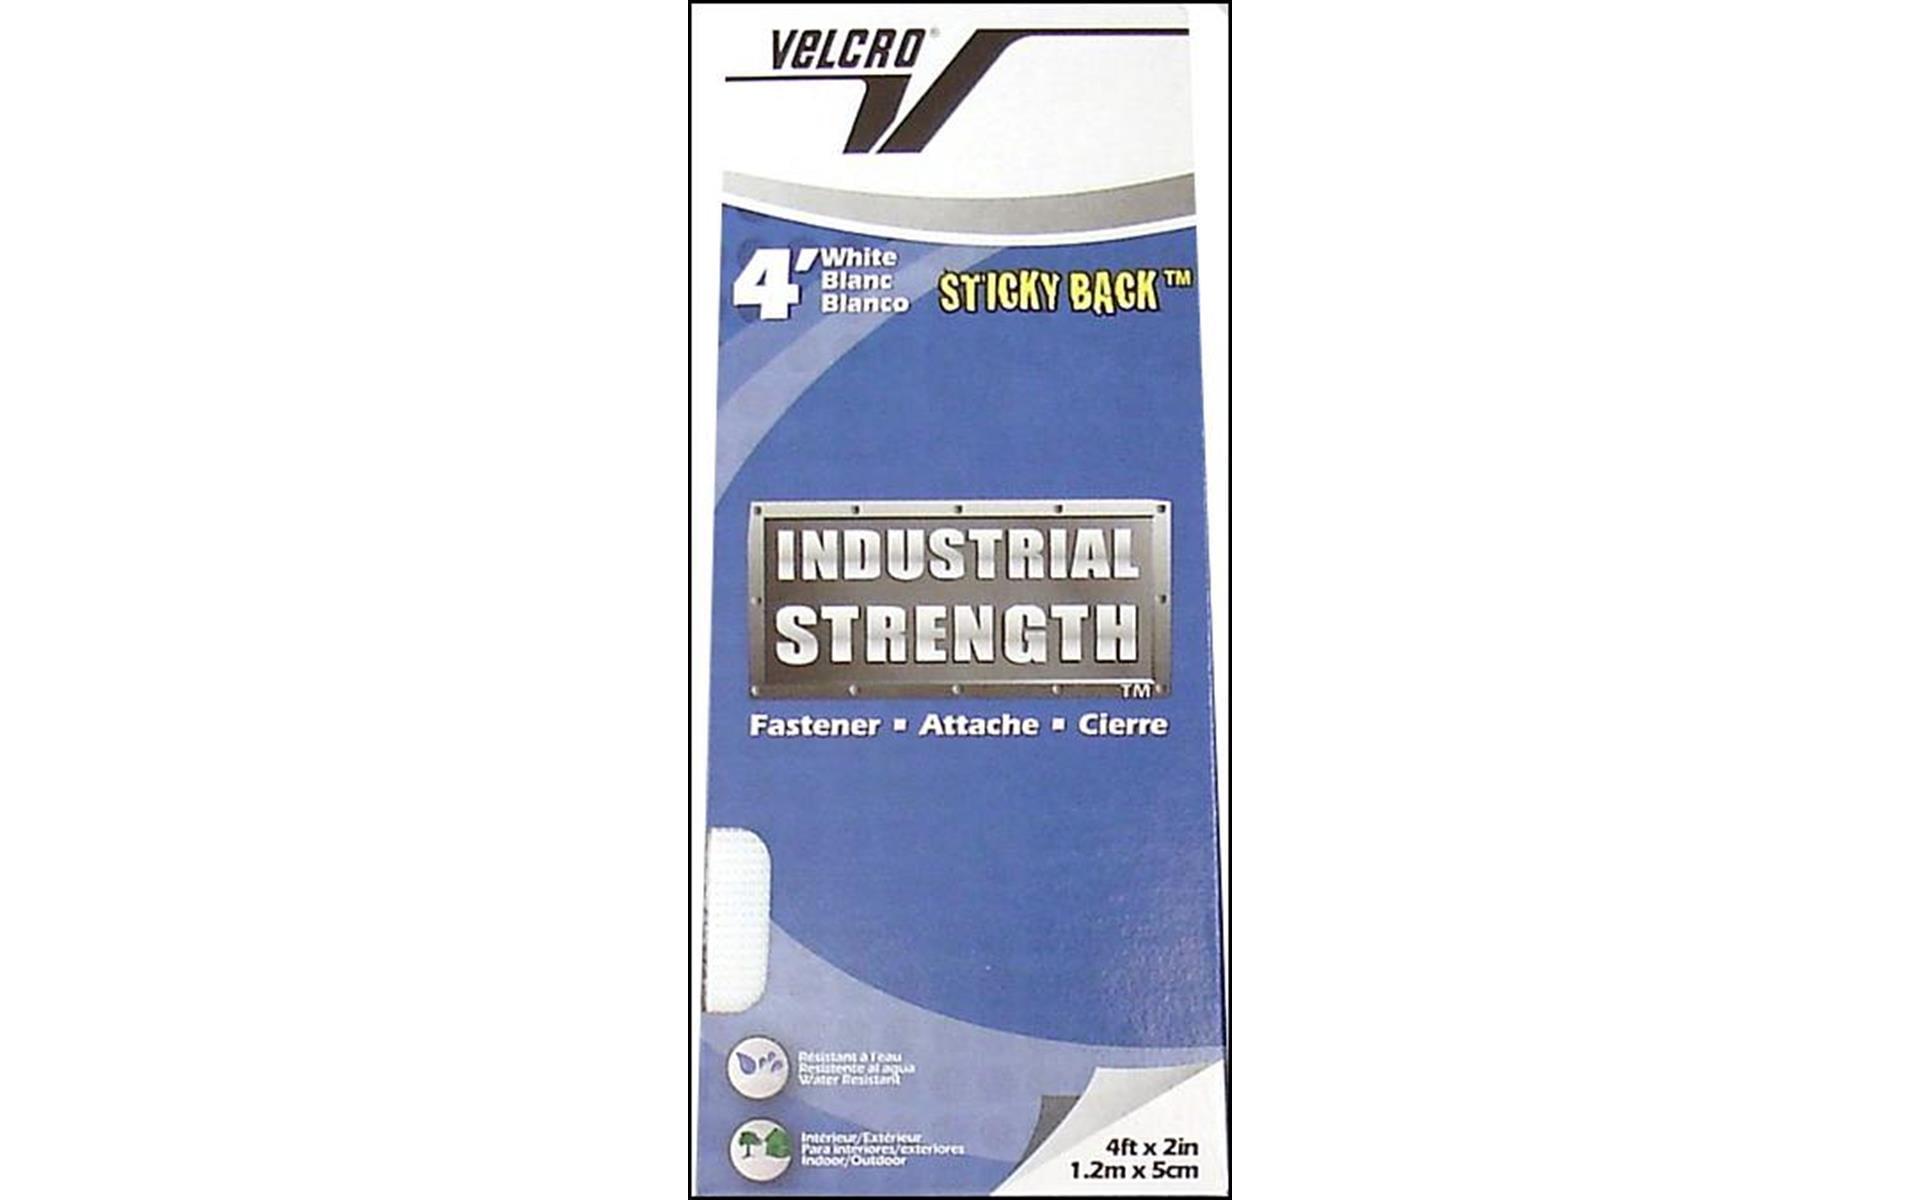 12 Packs: 2 ct. (48 total) VELCRO® Brand White Industrial Strength